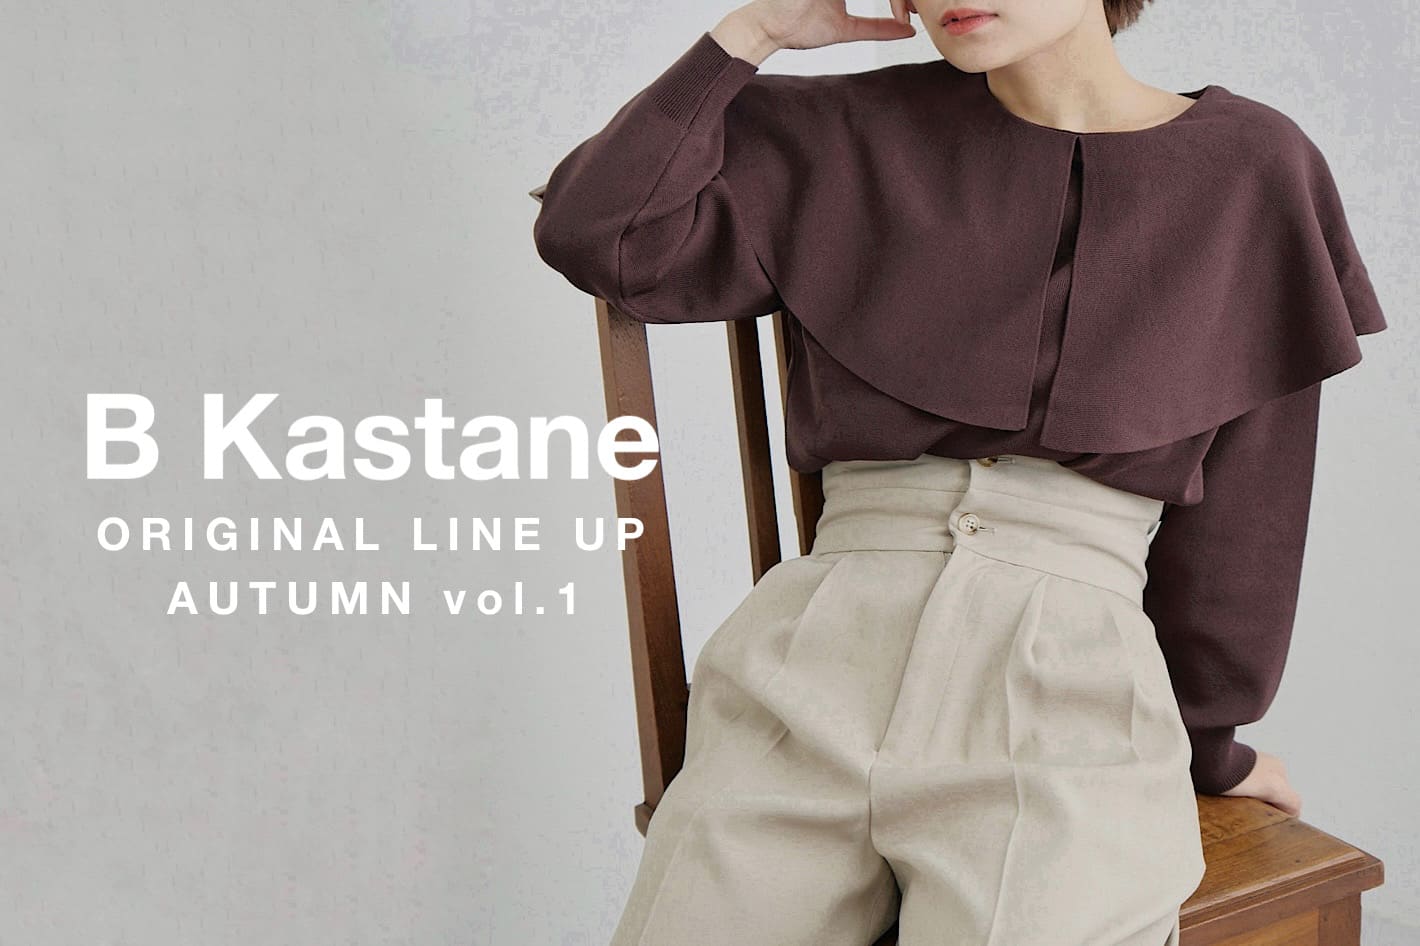 Kastane 【B Kastane】ORIGINAL LINE UP AUTUMN vol.1